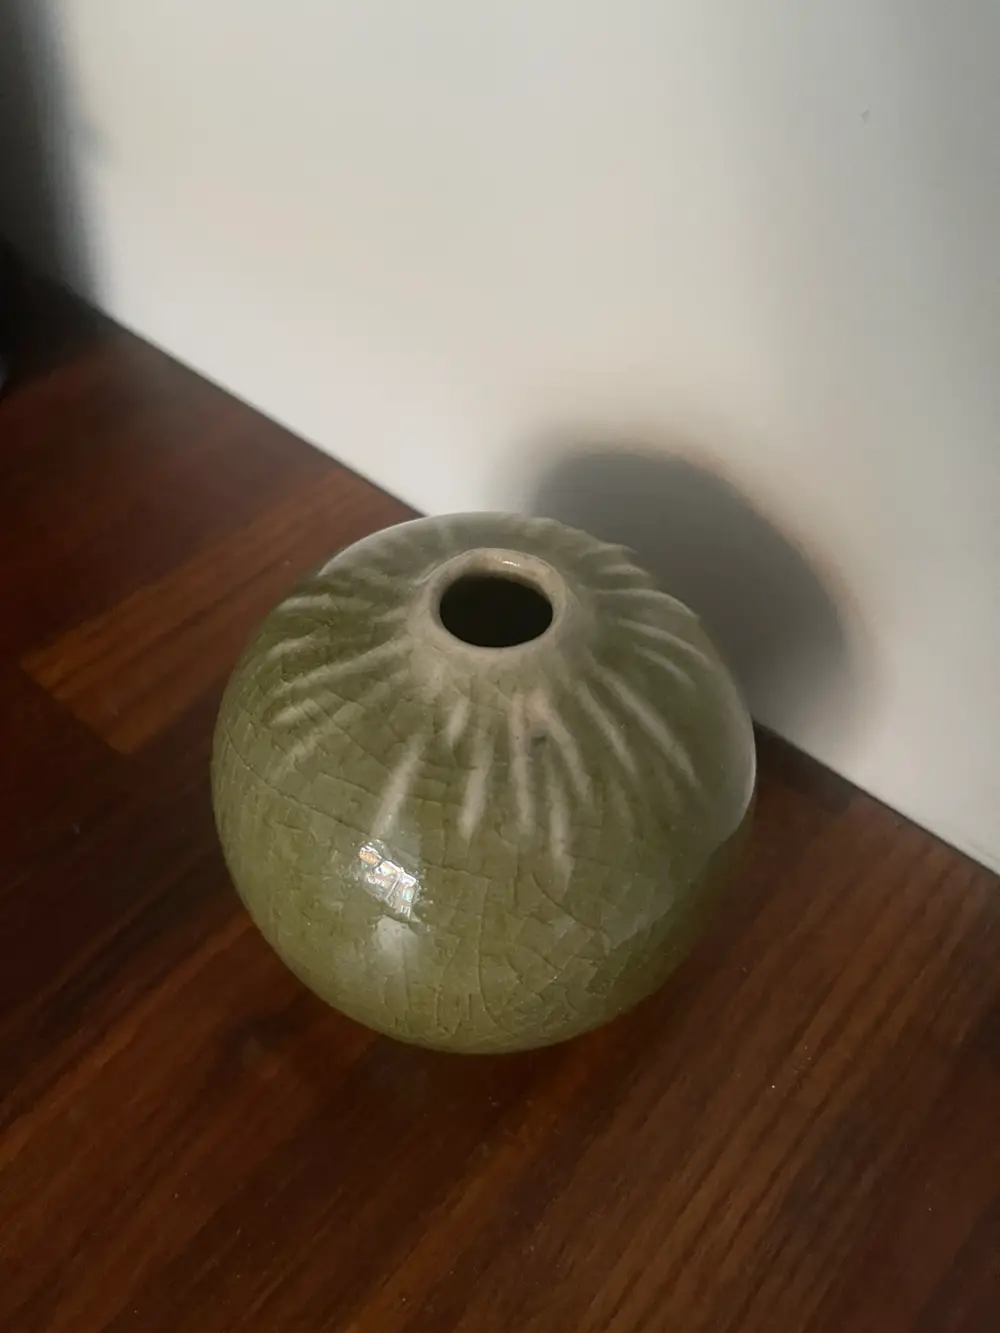 Vintage Keramik vase